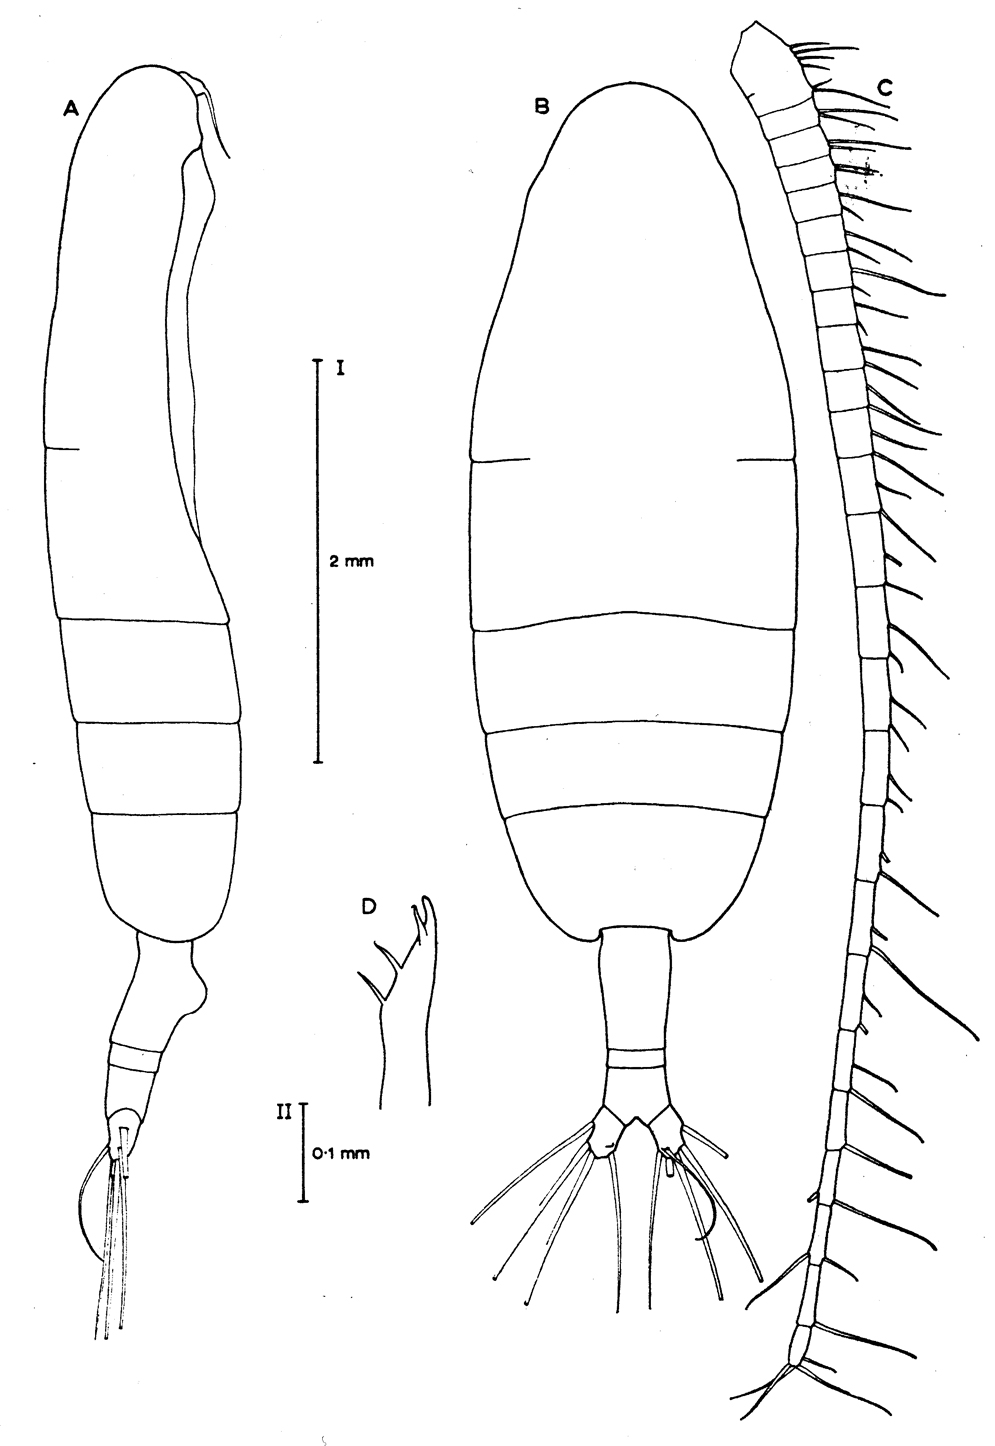 Species Euaugaptilus roei - Plate 1 of morphological figures